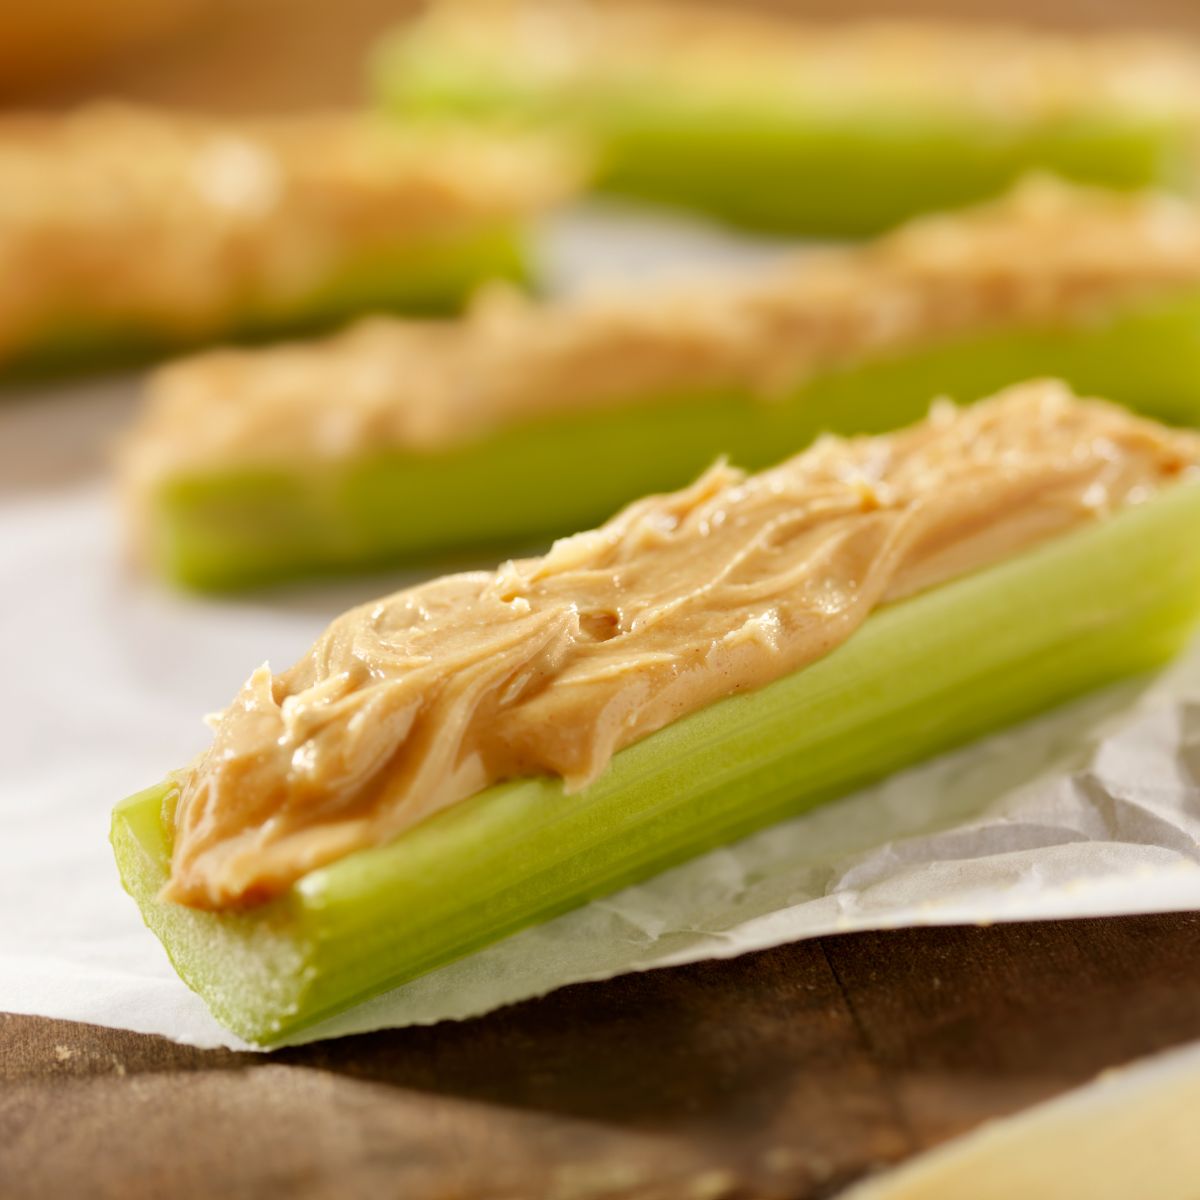 Pale brown hummus on top of celery sticks.